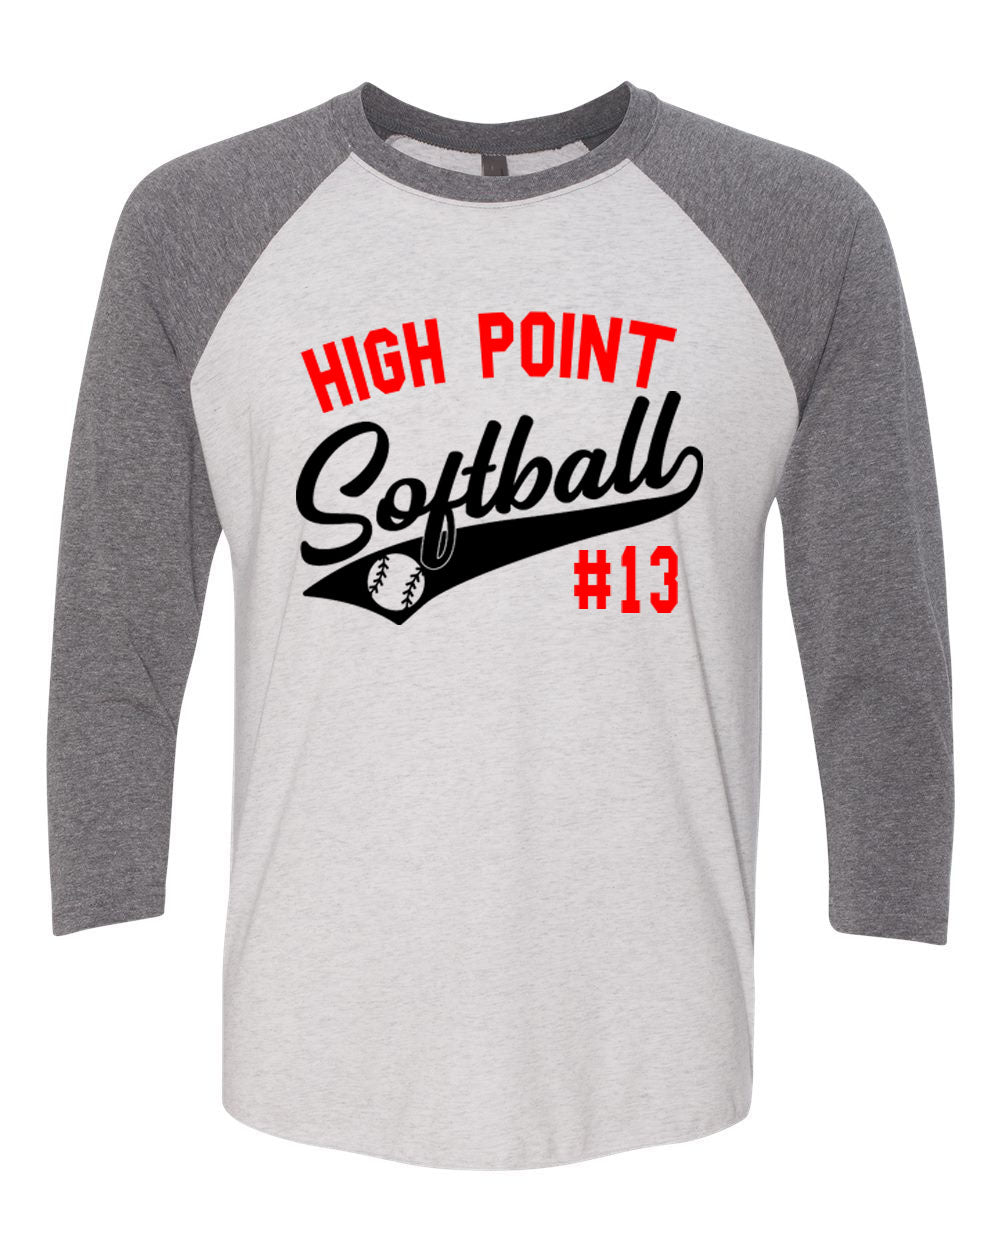 High Point Softball design 2 raglan shirt